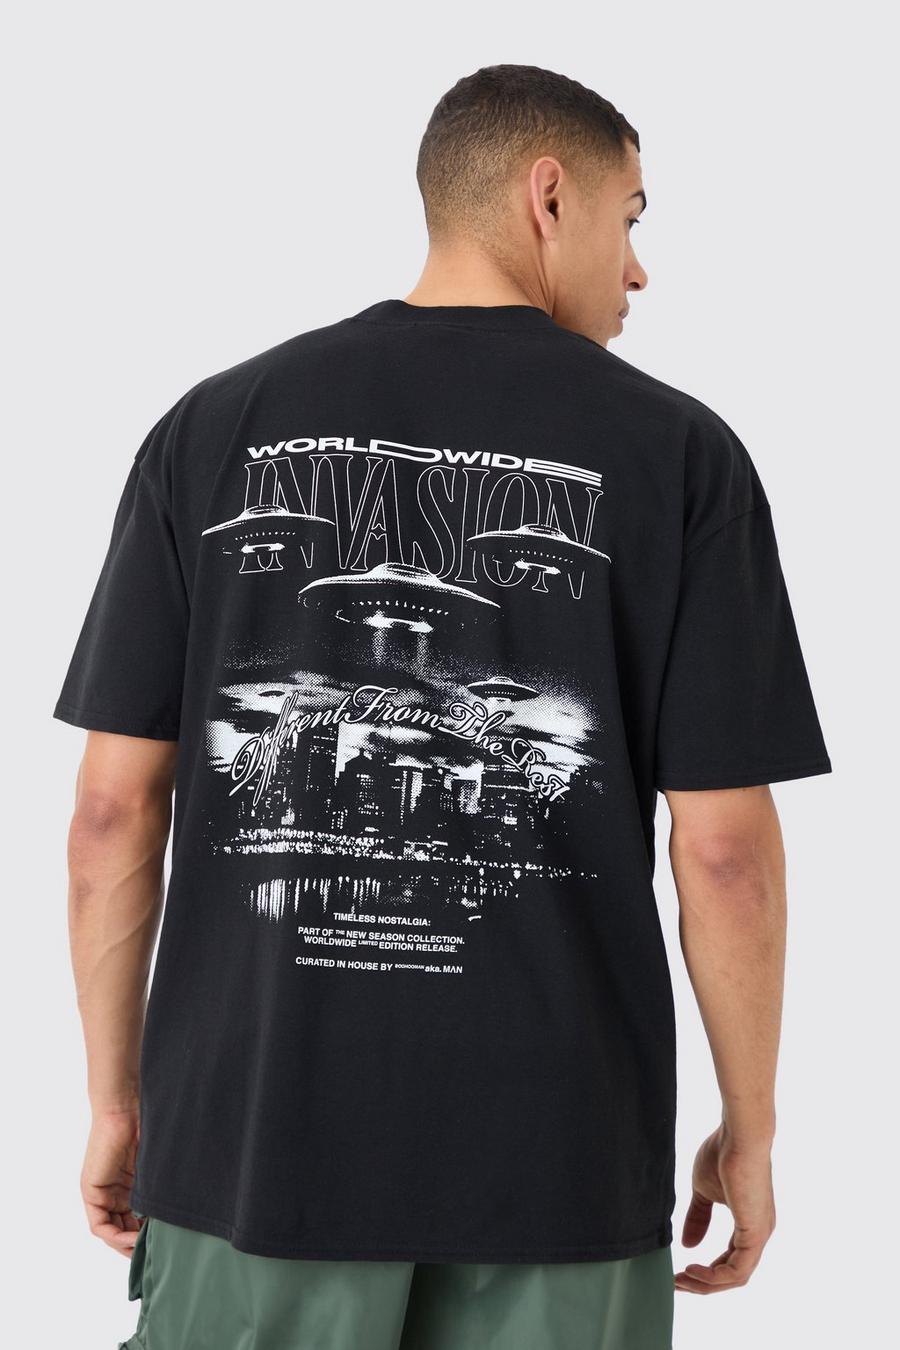 Black Oversized Back Print Worldwide Spaceship T-shirt